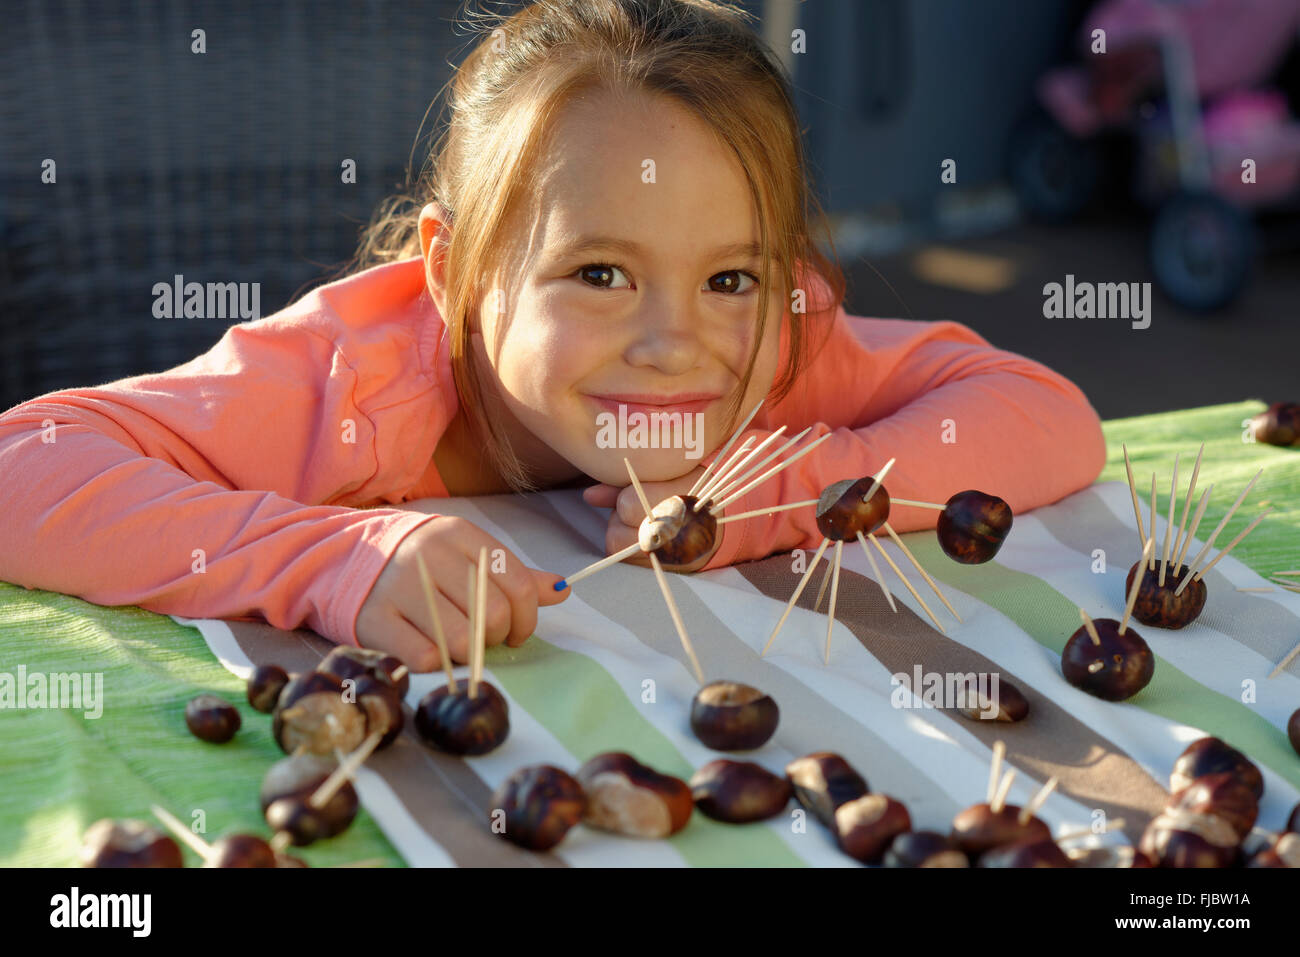 Girl, child creating chestnut figures, Chestnut man, autumn, Bavaria, Germany Stock Photo